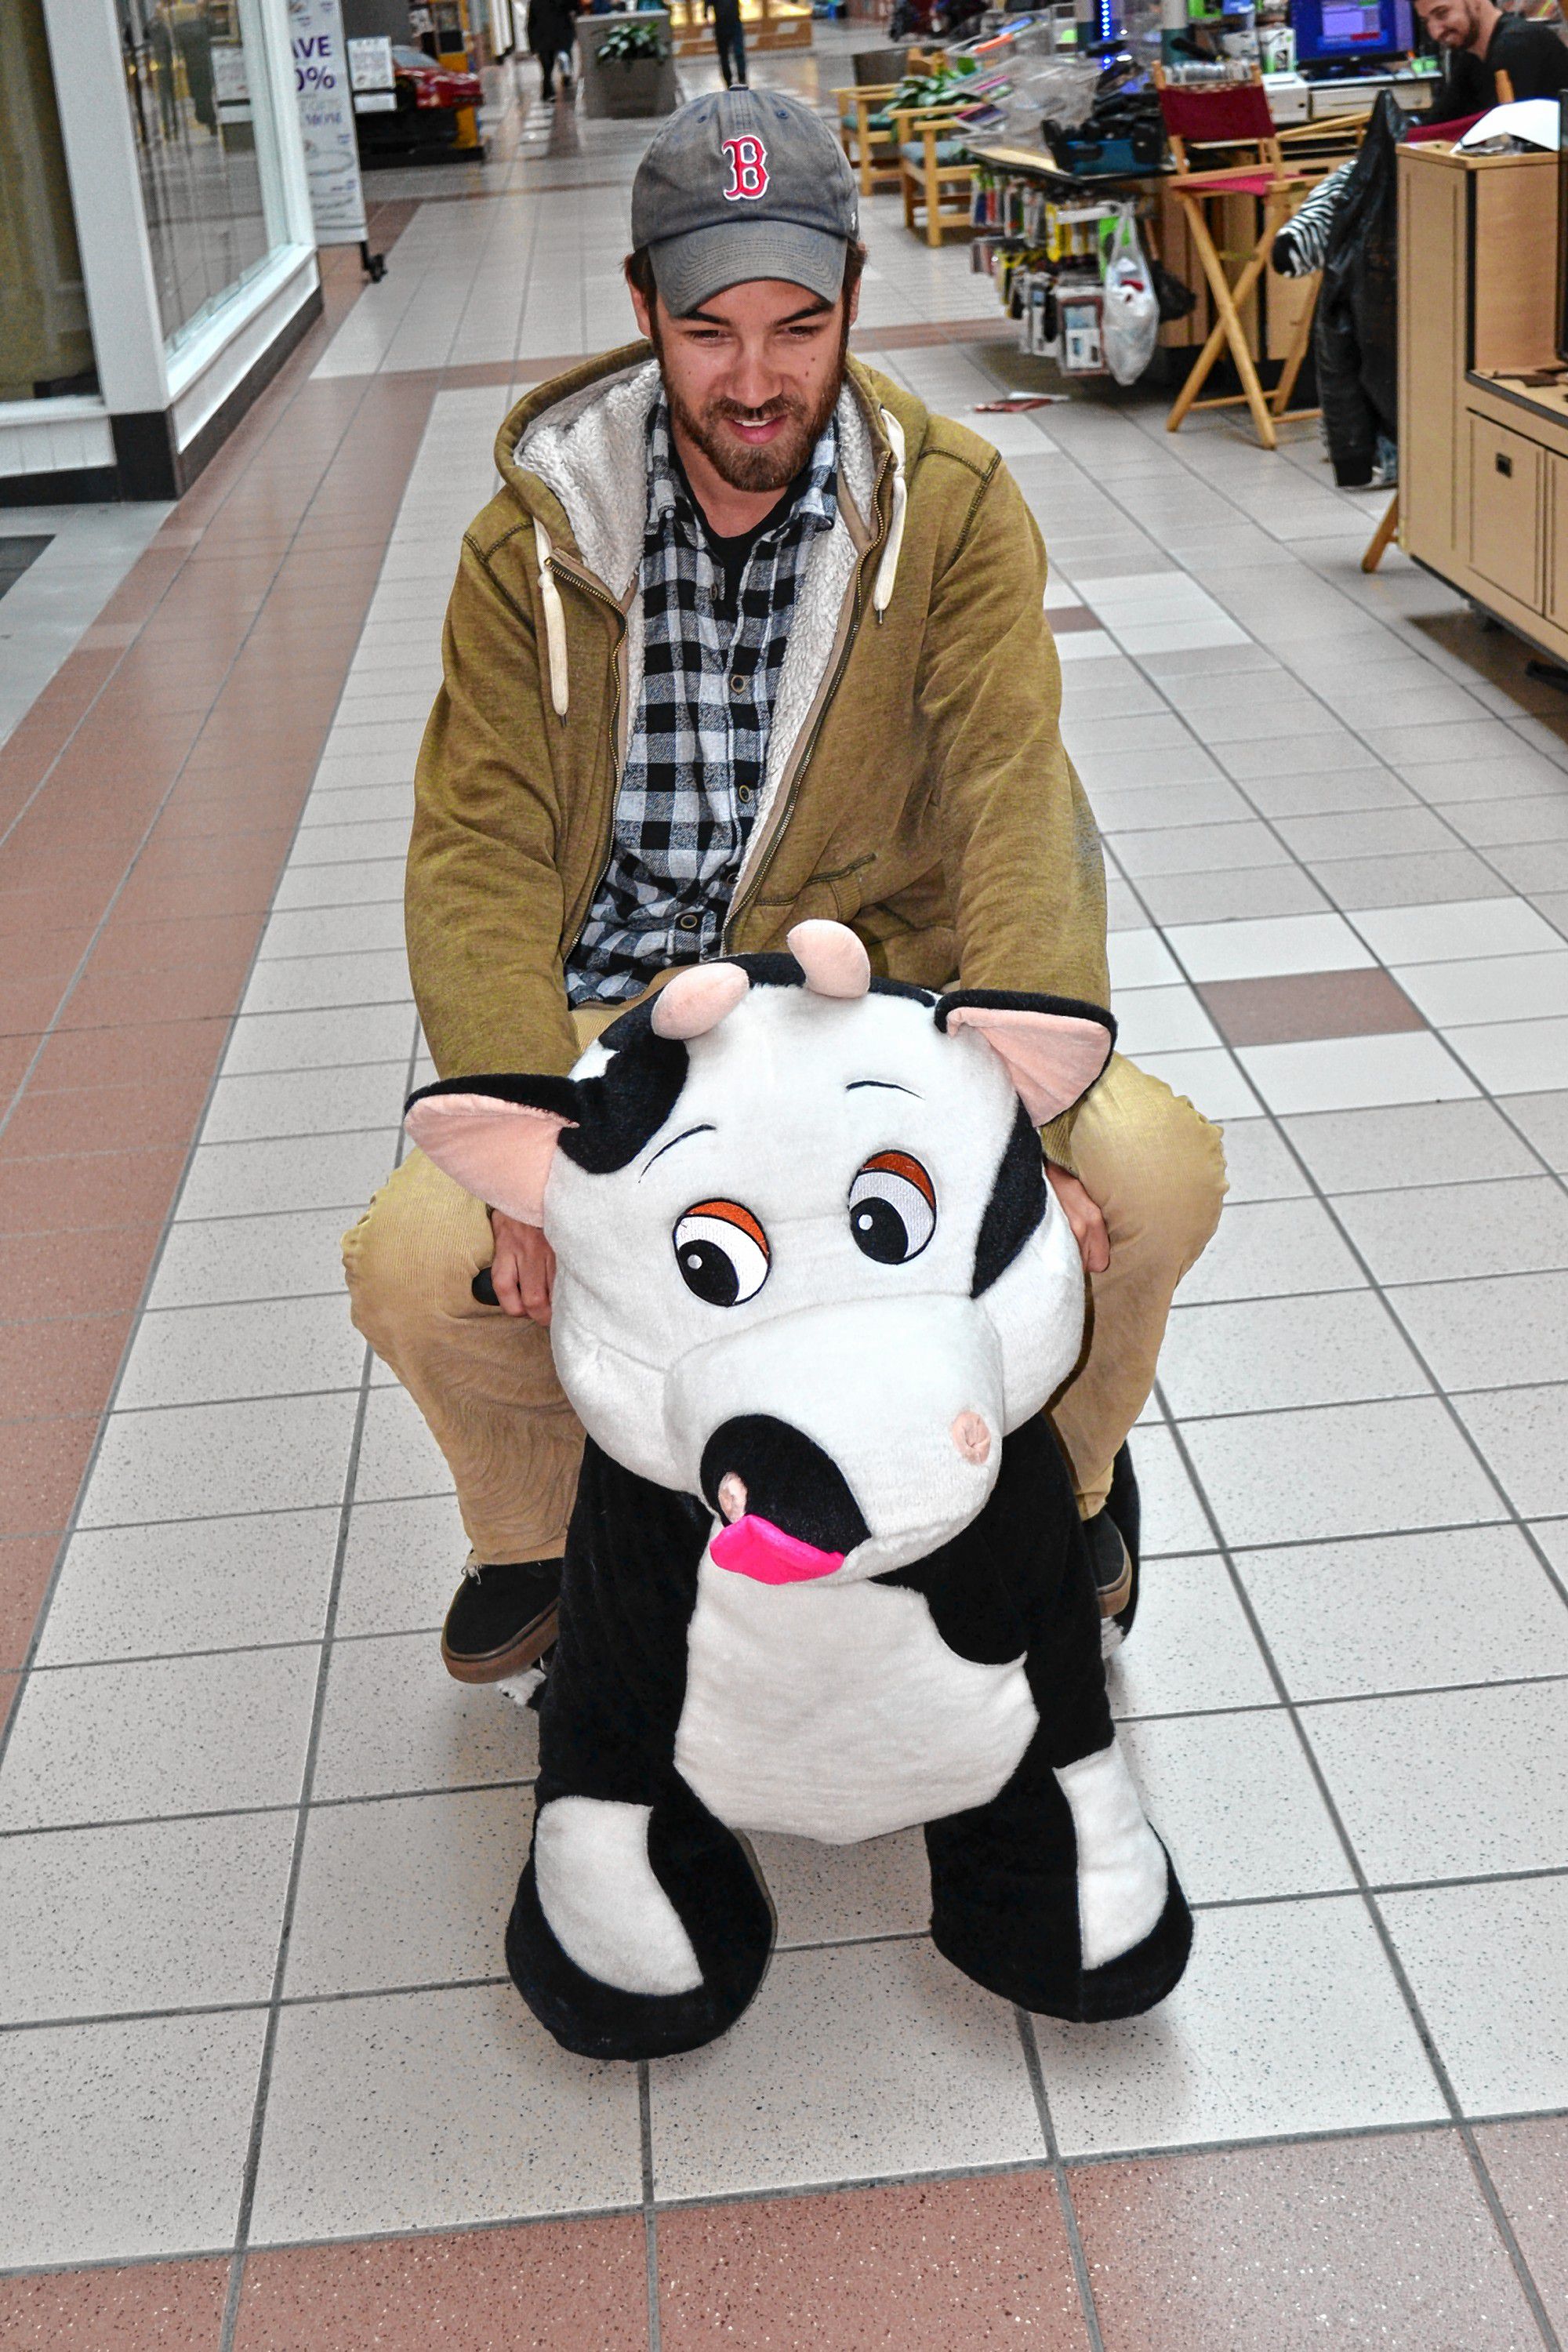 riding stuffed animals in mall